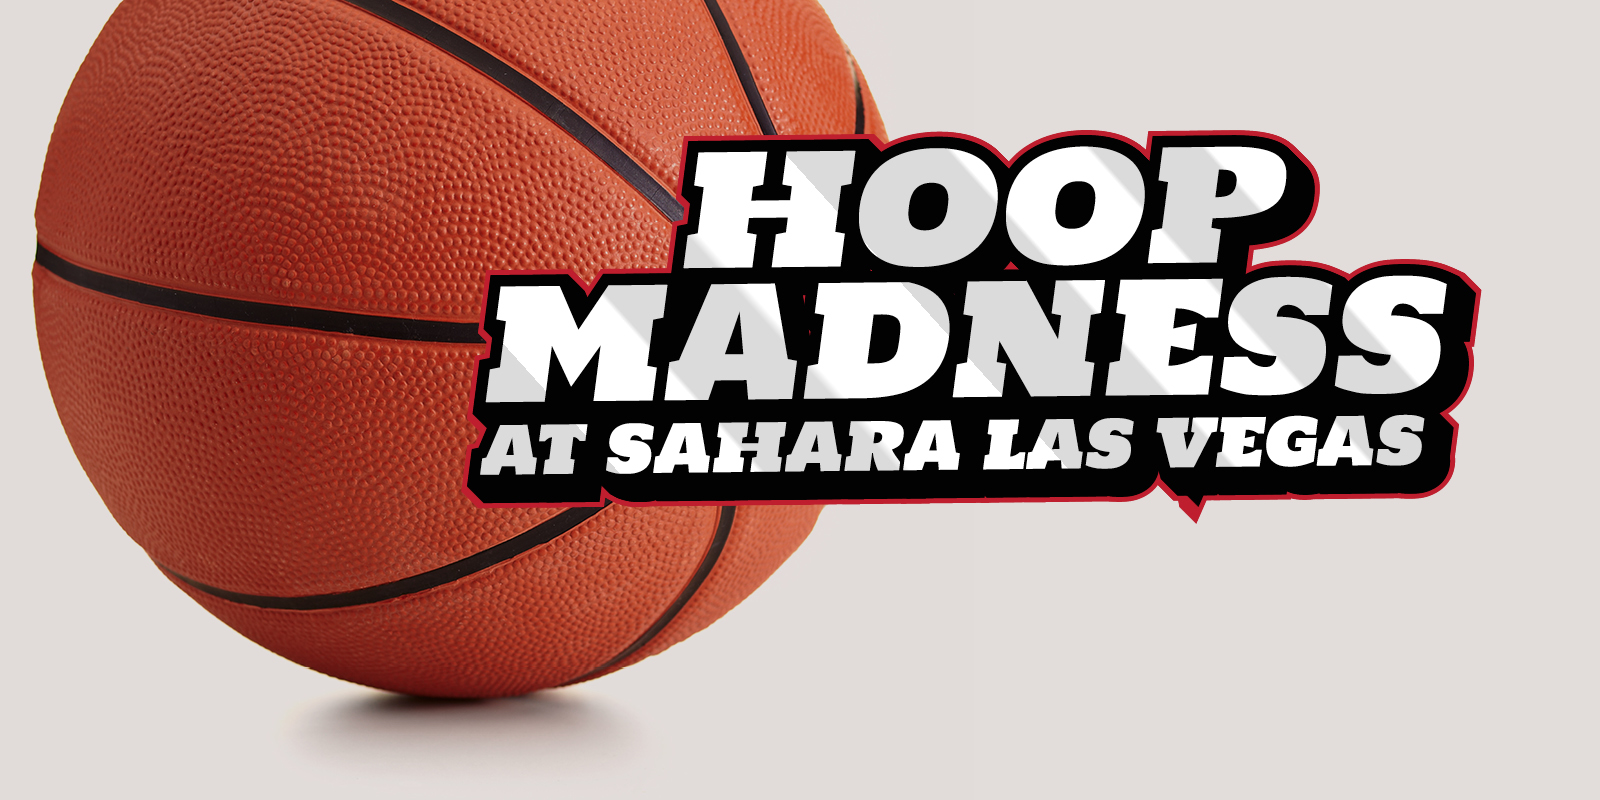 Creative for Hoop Madness at SAHARA Las Vegas showing a basketball